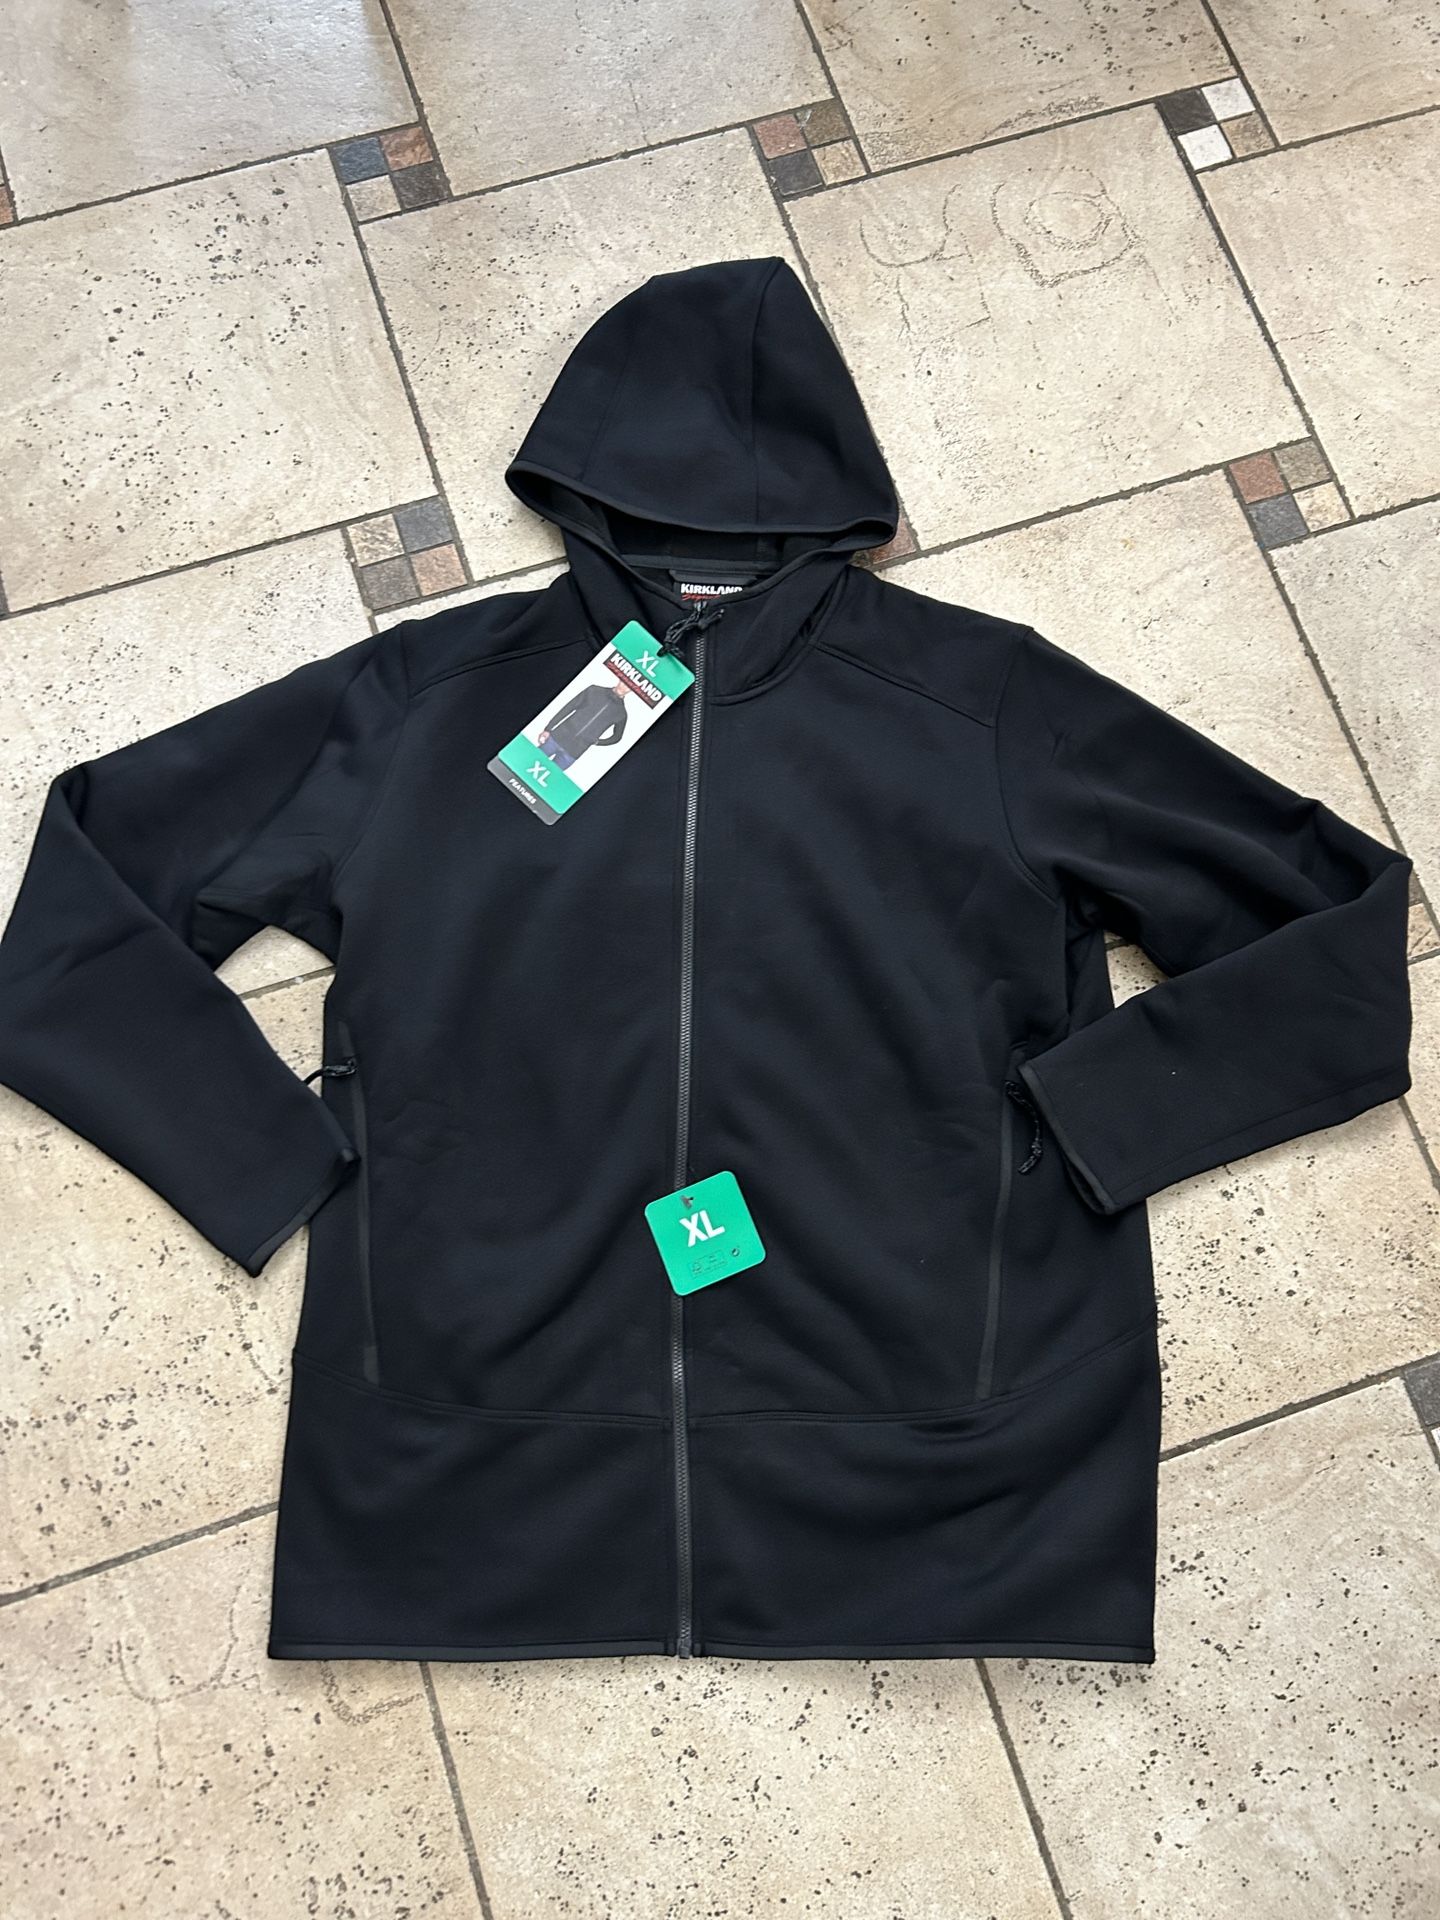 NWT Men’s hooded full zip fleece jacket Size XL